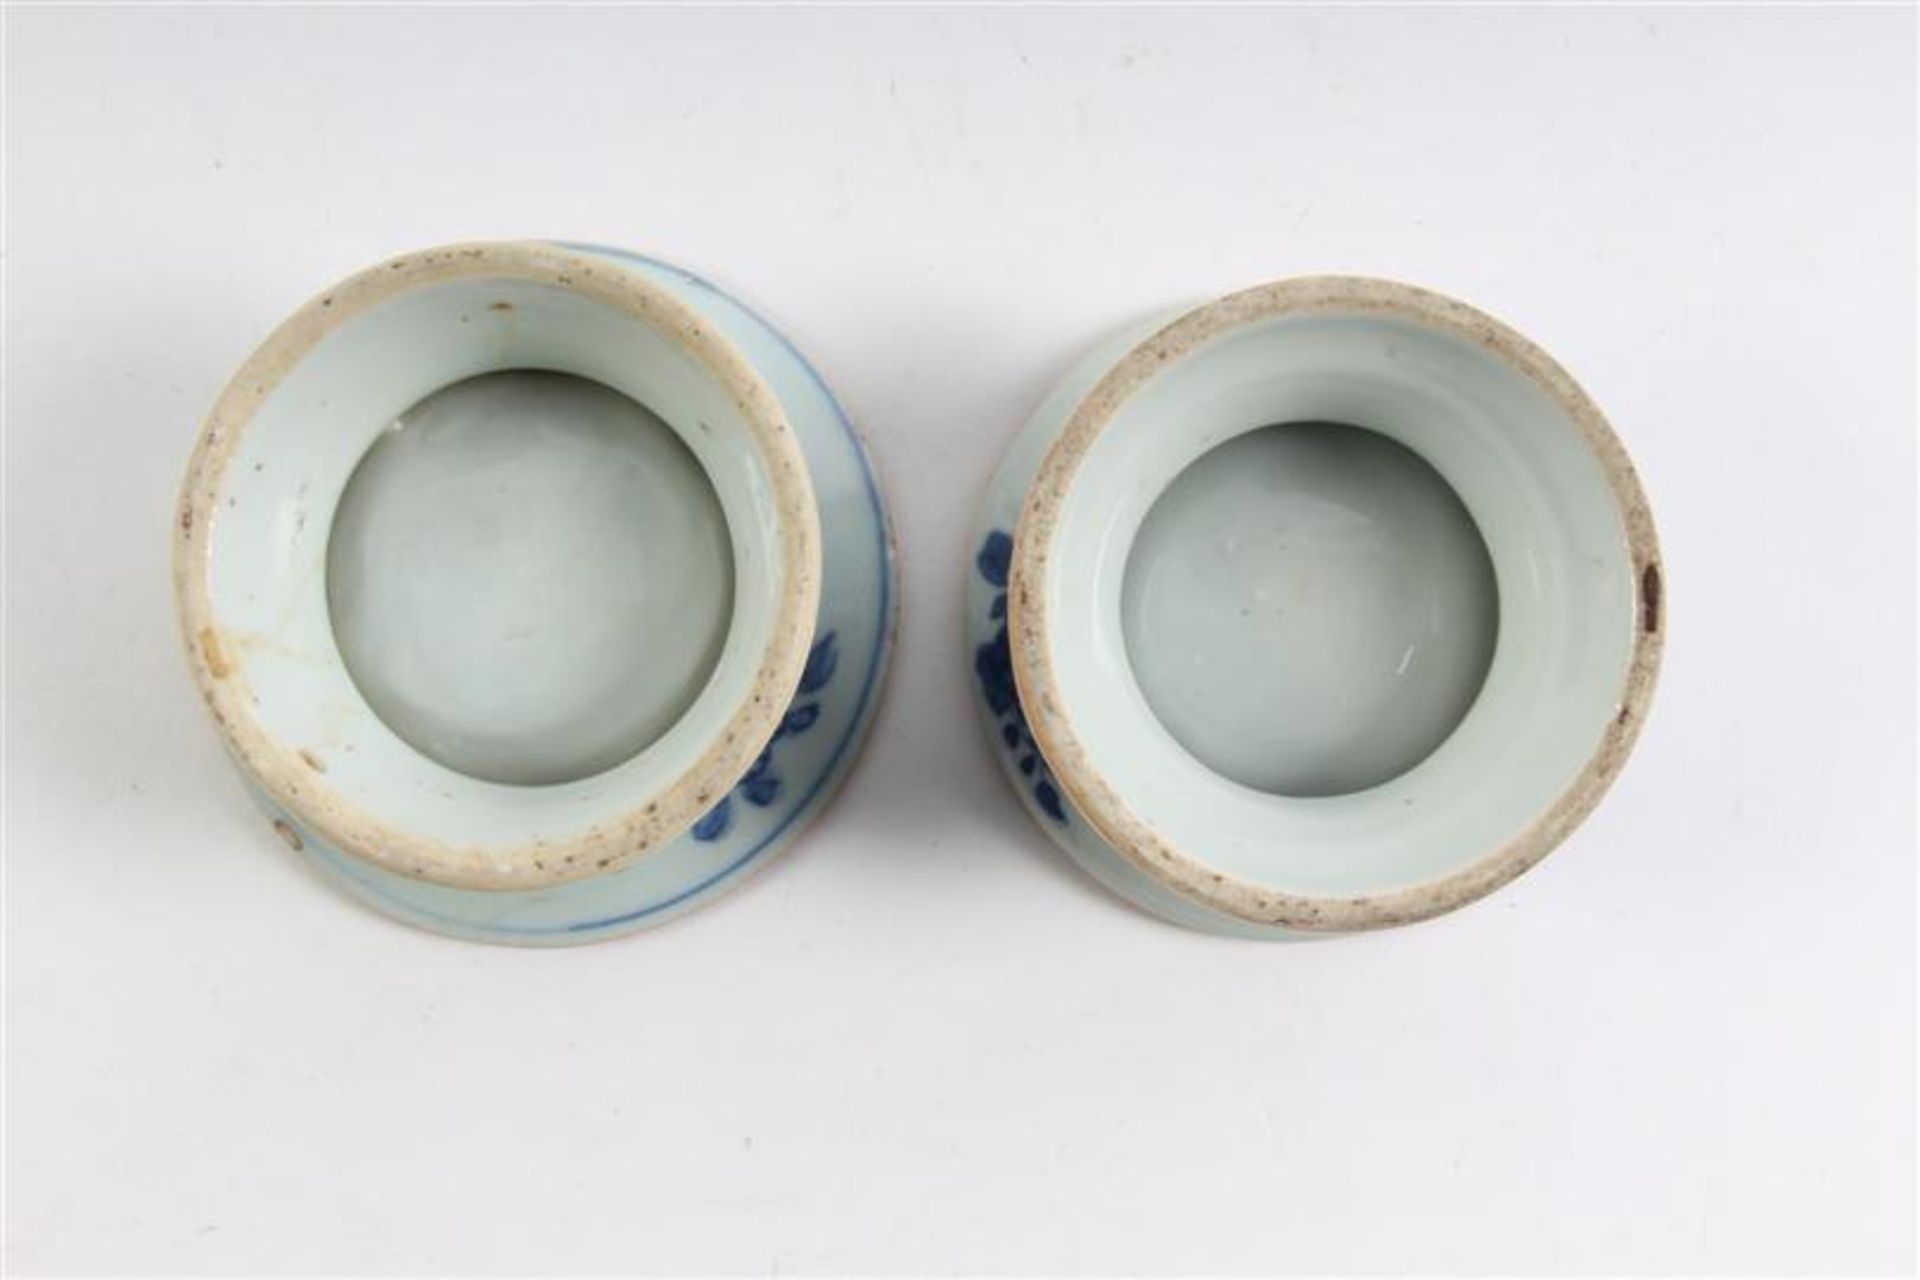 Twee porseleinen zoutvaten, China, 18e eeuw. HxD: 4 x 9.3 en 4.4 x 8.5 cm. - Bild 3 aus 4